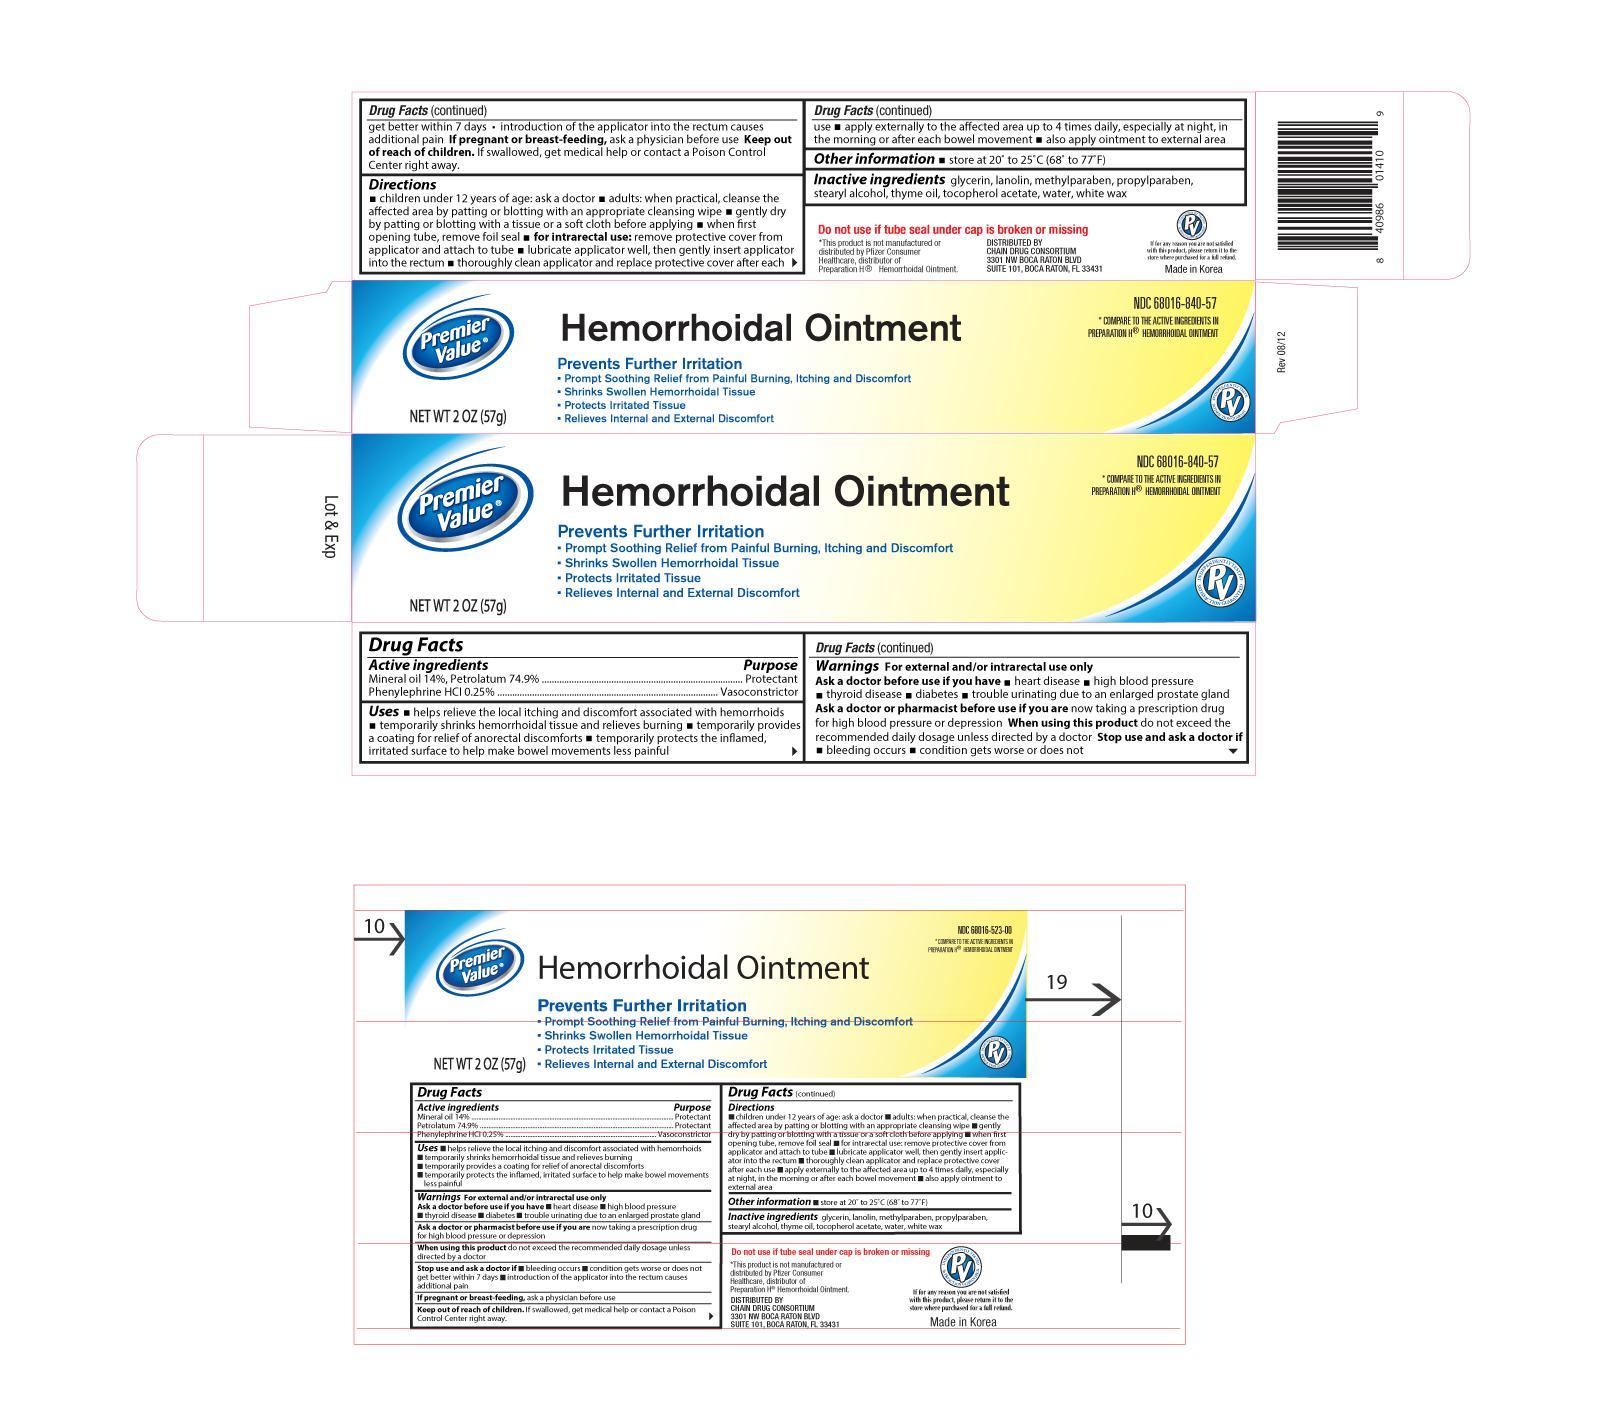 Premier Value Hemorrhoidal | Mineral Oil, Petrolatum, And Phenylephrine Hydrochloride Ointment Breastfeeding